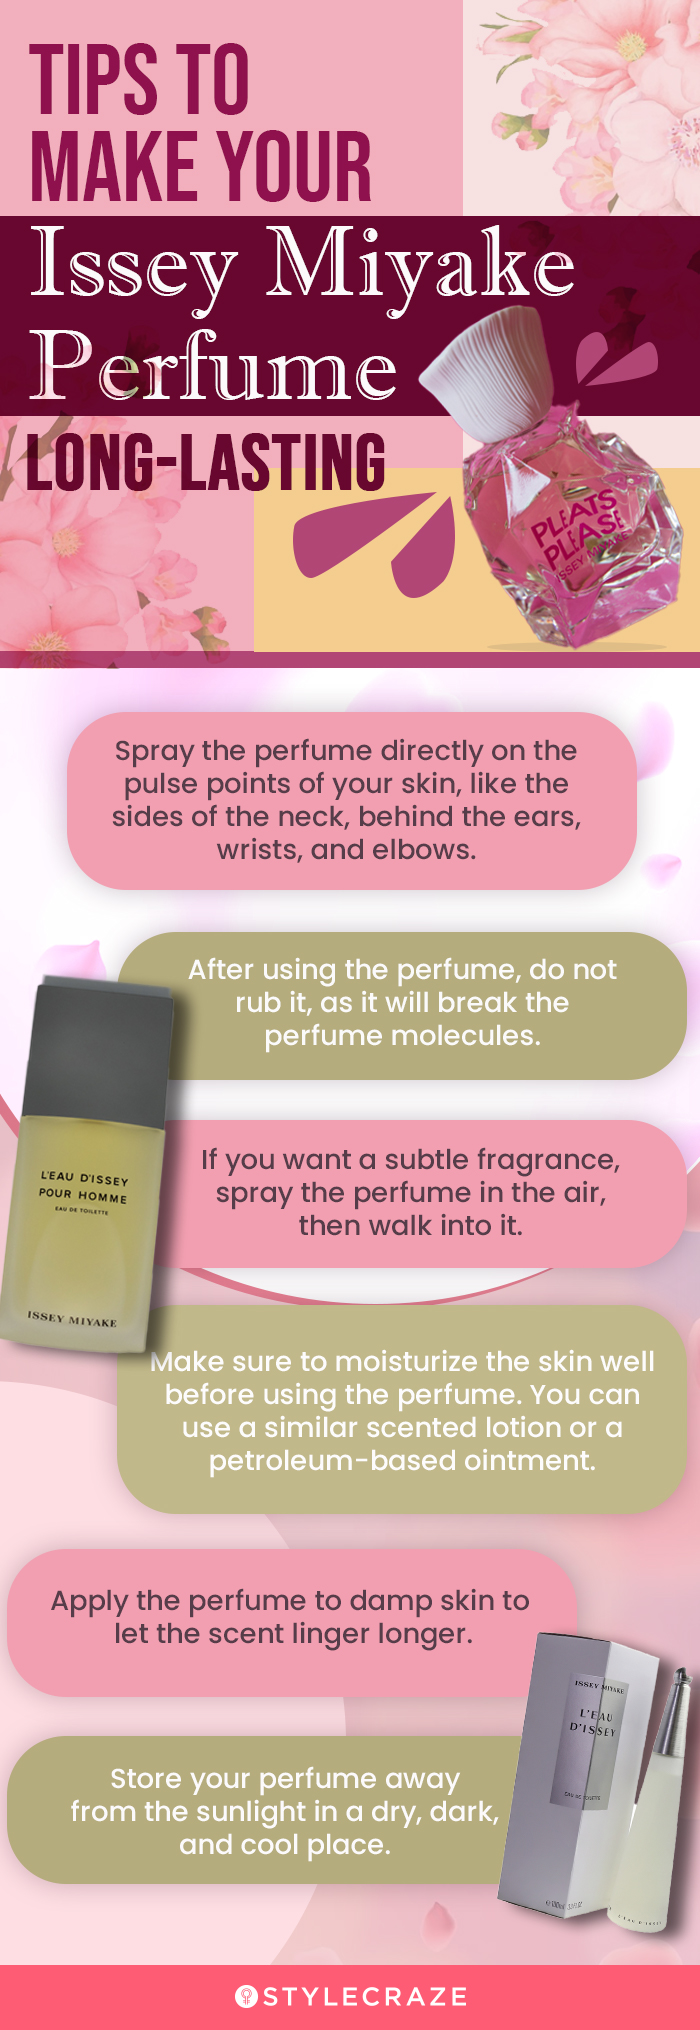 Tips To Make Your Issey Miyake Perfume Long-Lasting